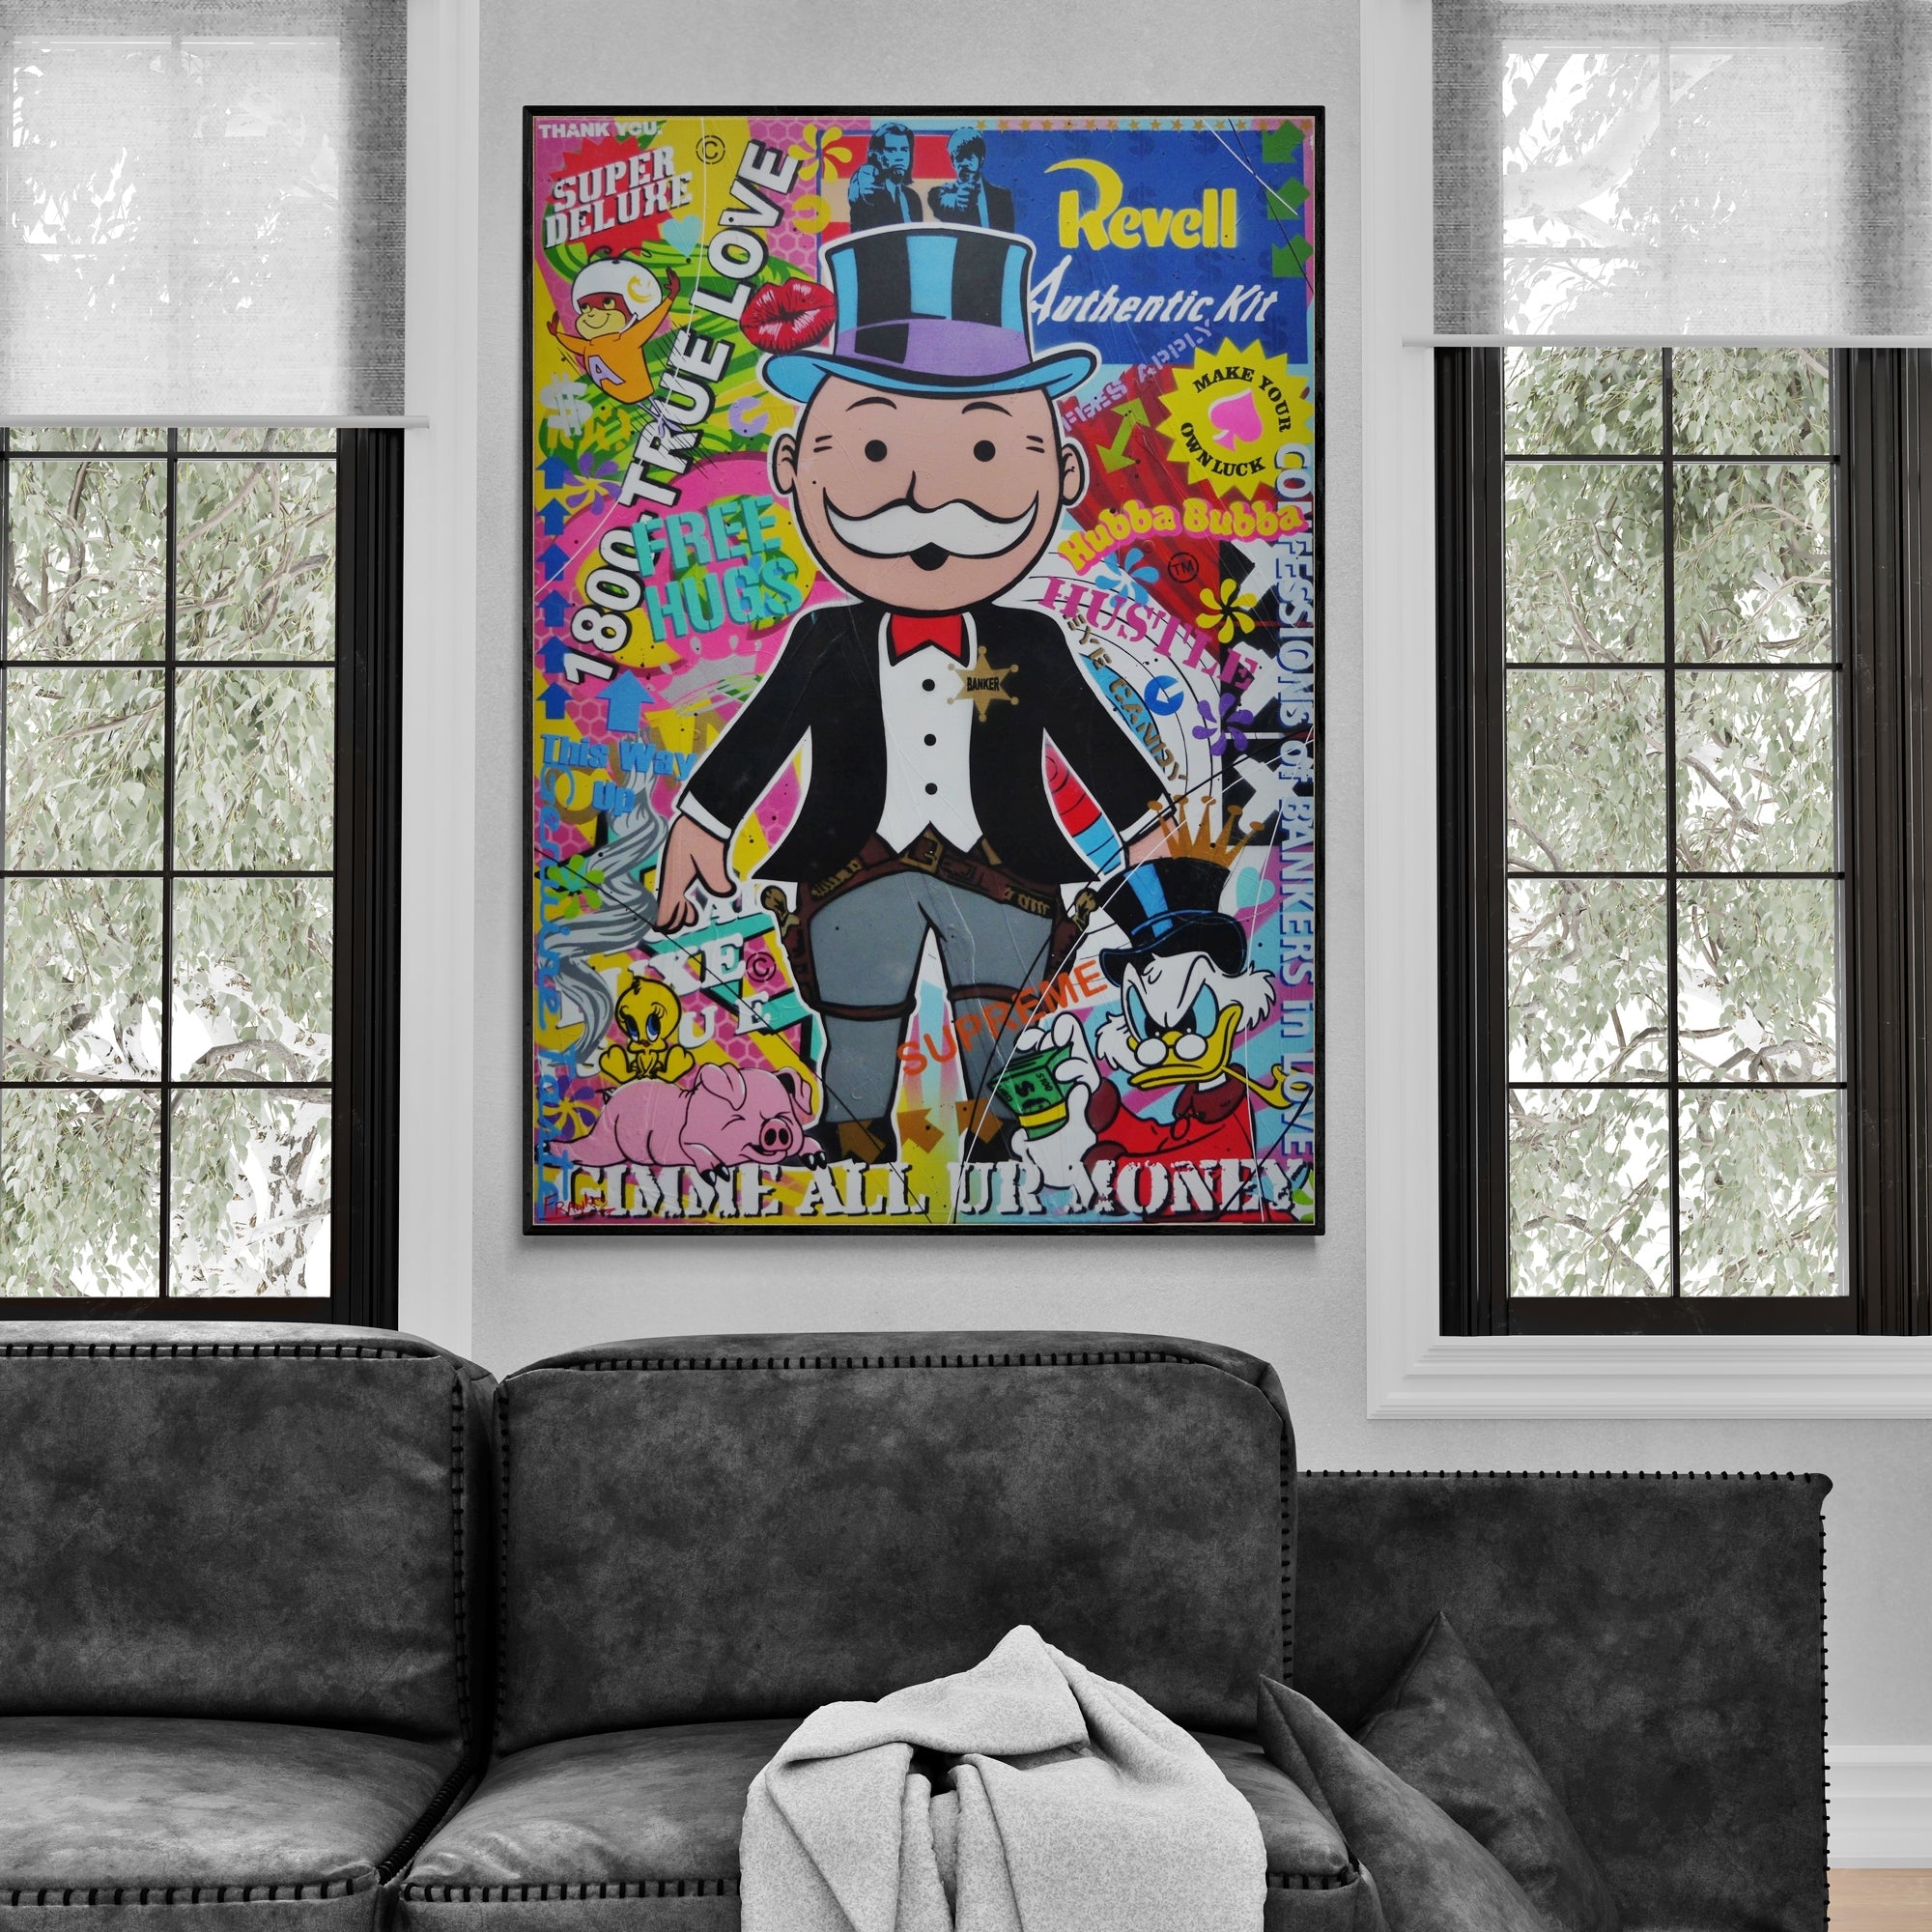 The Banker 140cm x 100cm Monopoly Man Textured Urban Pop Art Painting (SOLD)